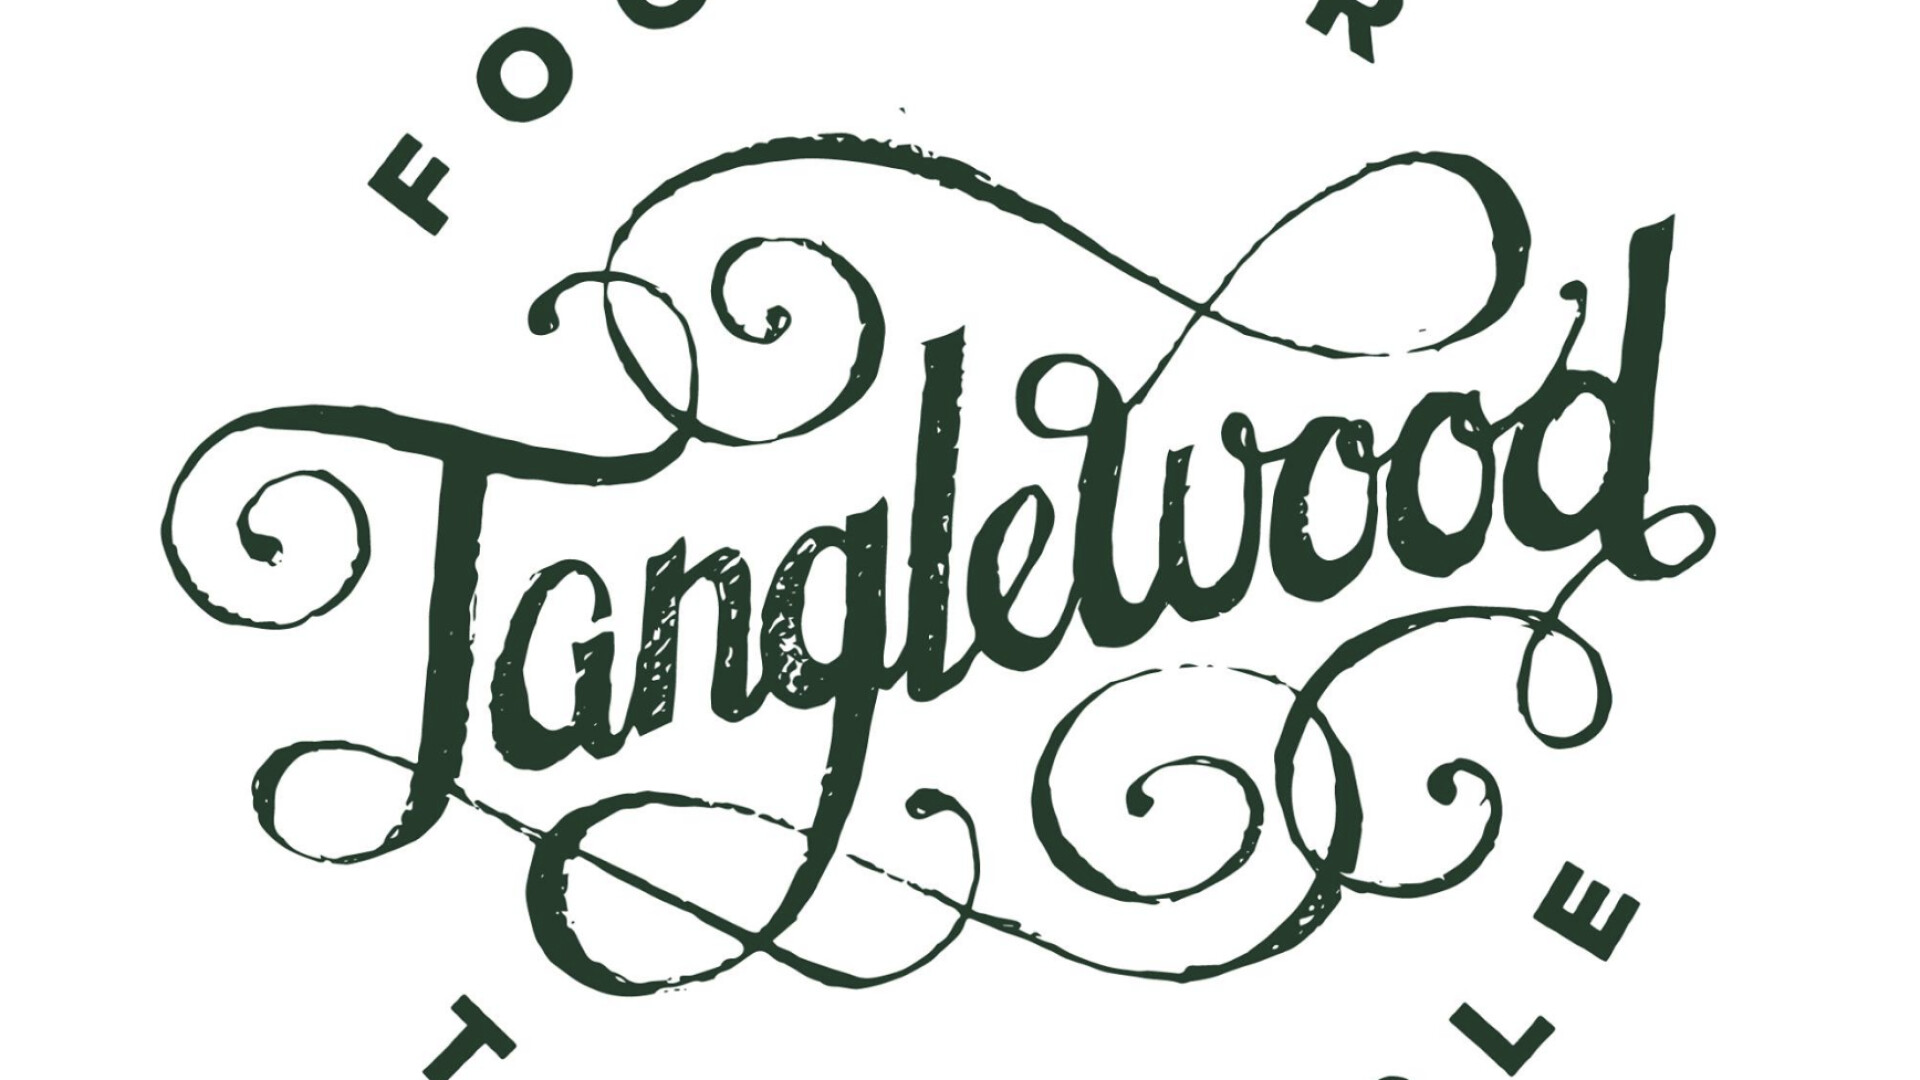 gloomwood tangle